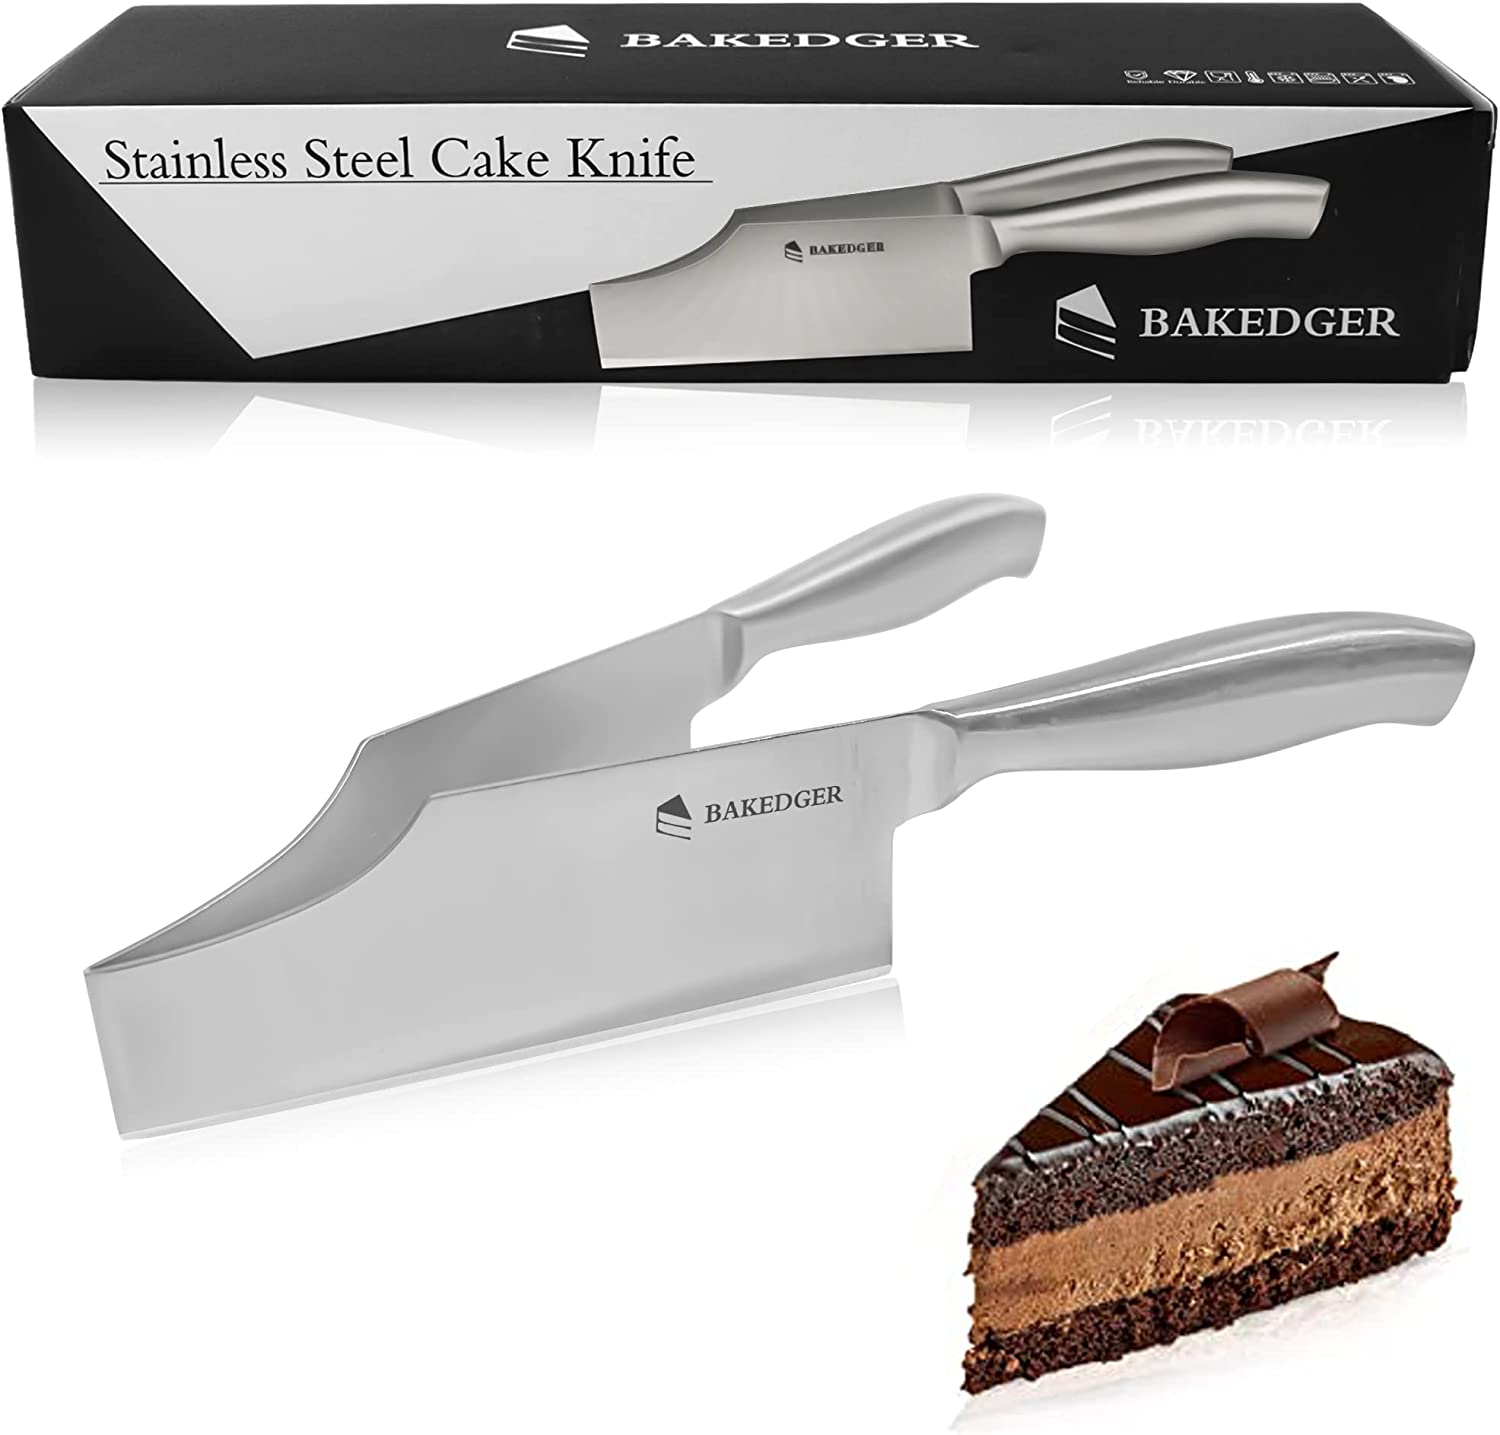 Cake knife slicer and cutter